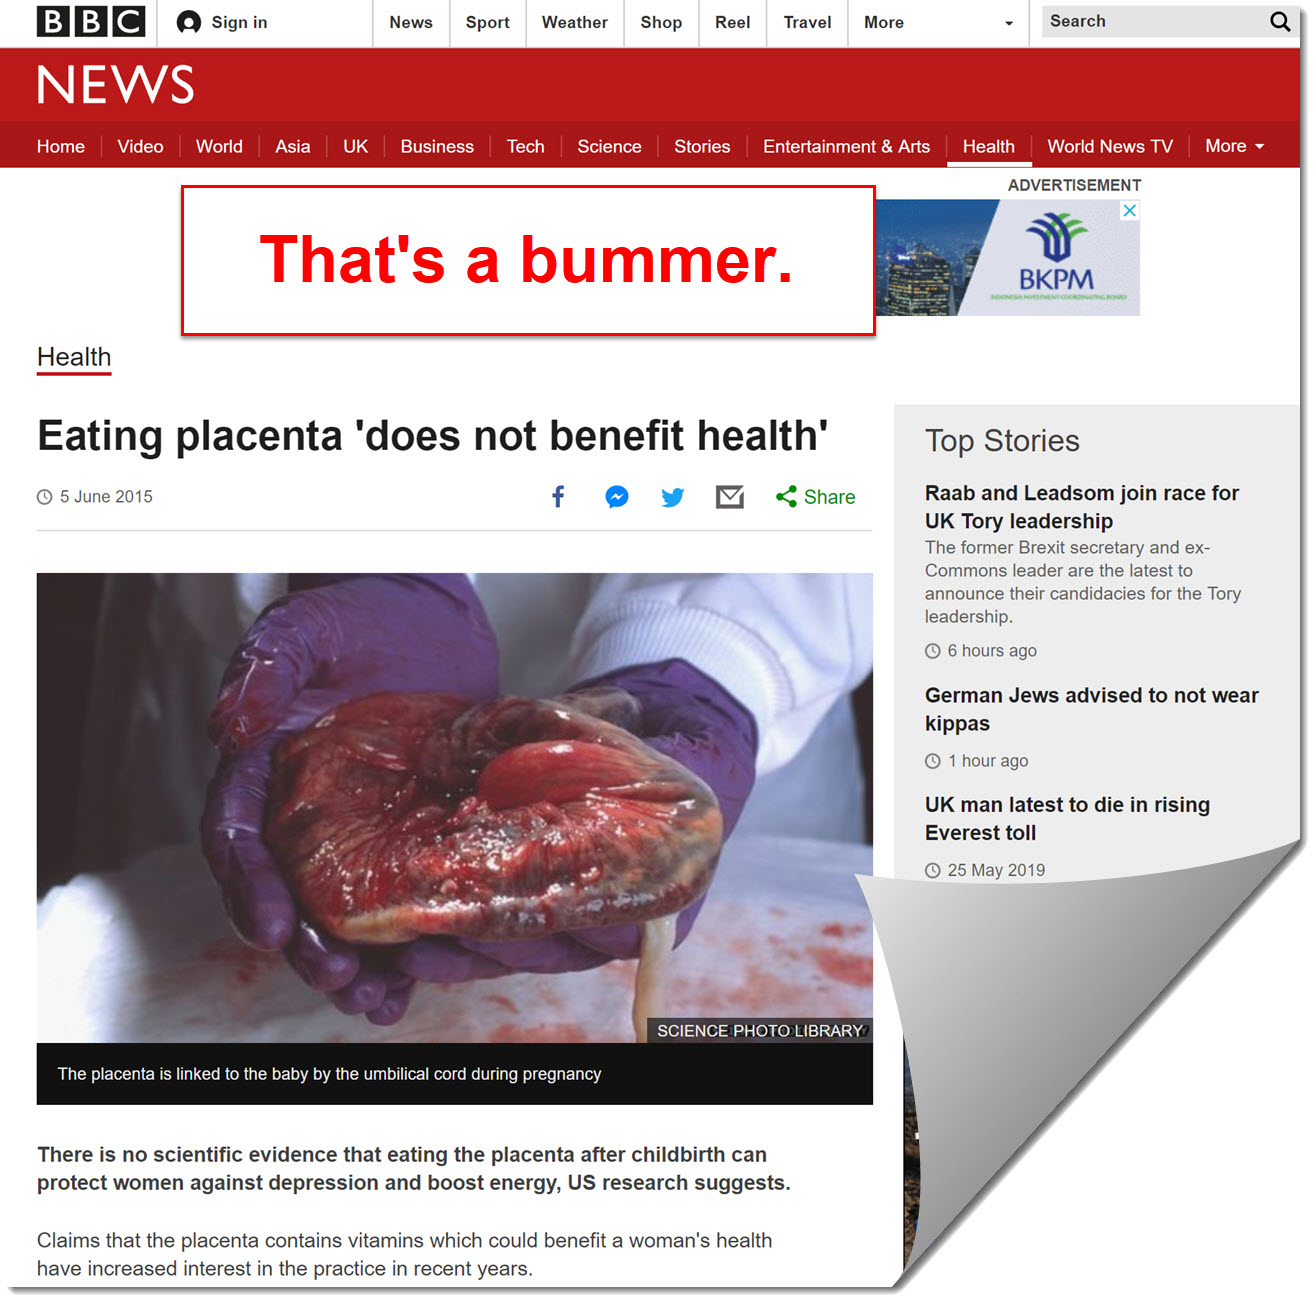 BBC news statement on eating placenta